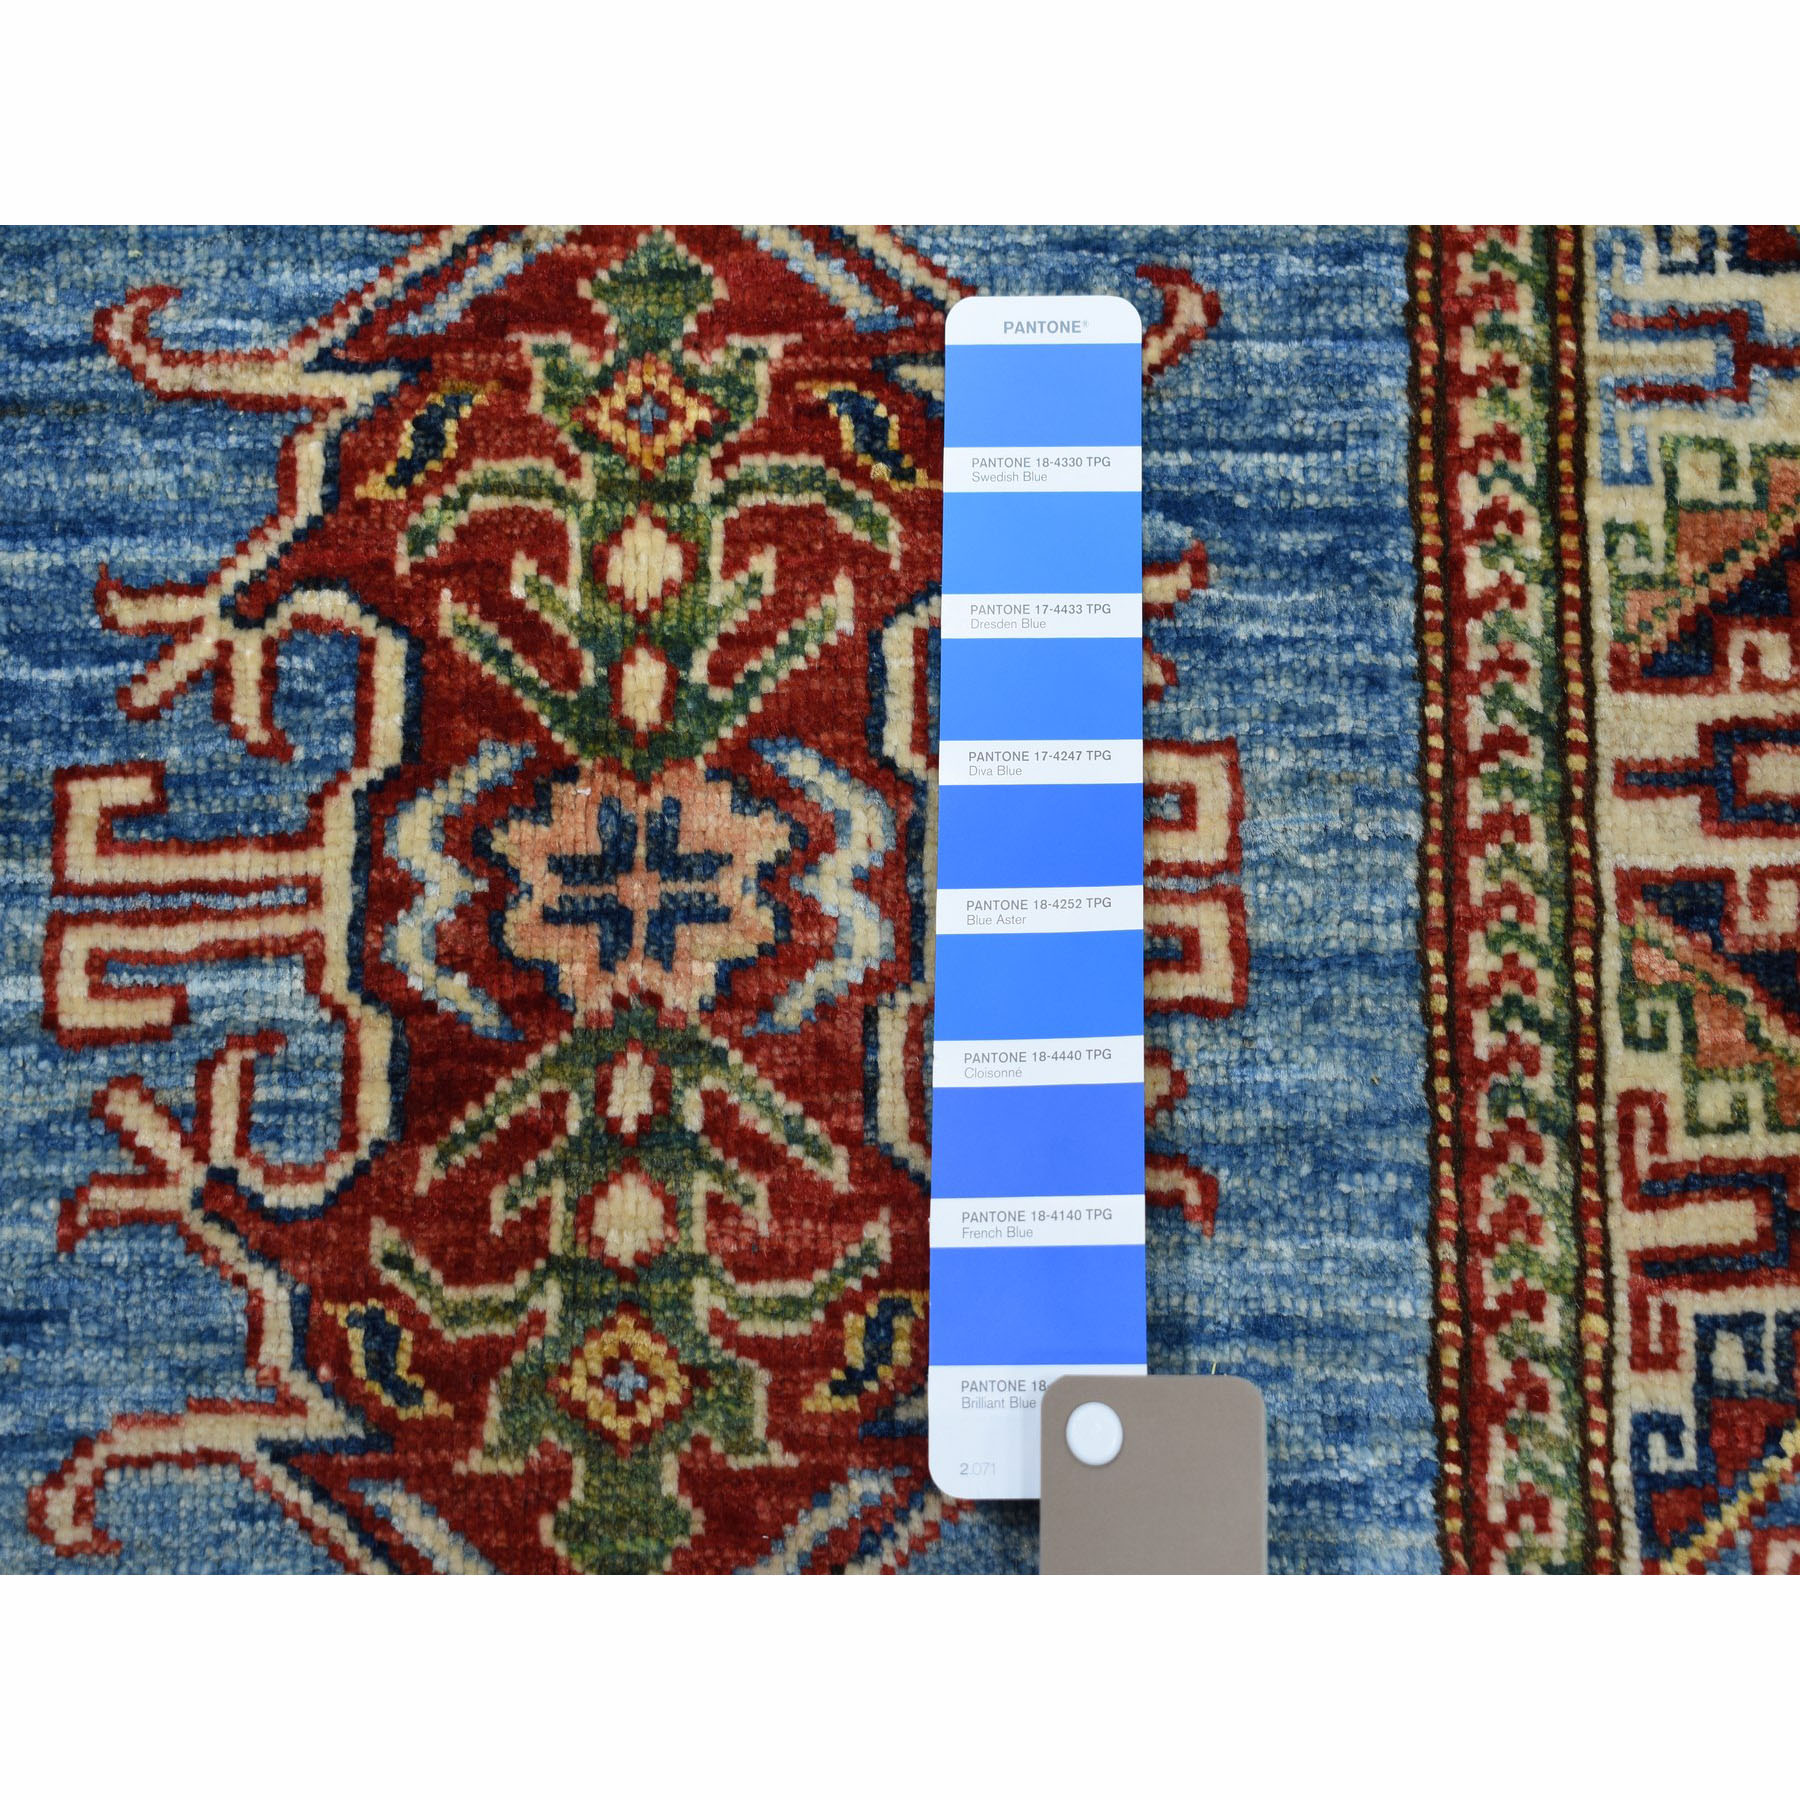 2'1"x3' Super Kazak Pure Wool Blue Geometric Design Hand Woven Oriental Rug 